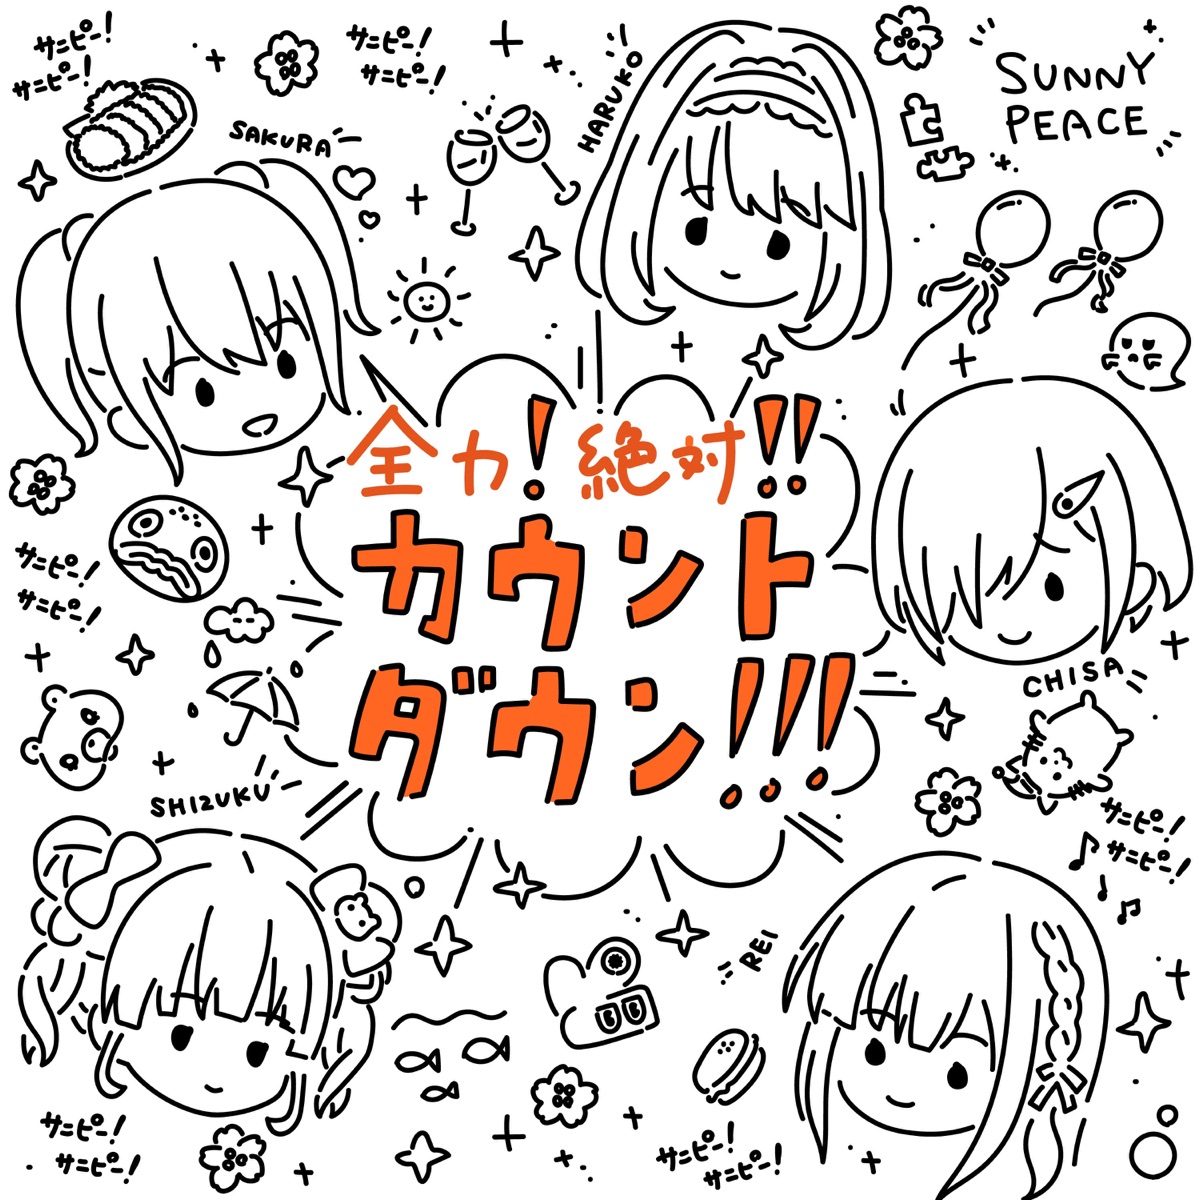 Cover art for『SUNNY PEACE - Zenryoku! Zettai!! Countdown!!!』from the release『Zenryoku! Zettai!! Countdown!!!』